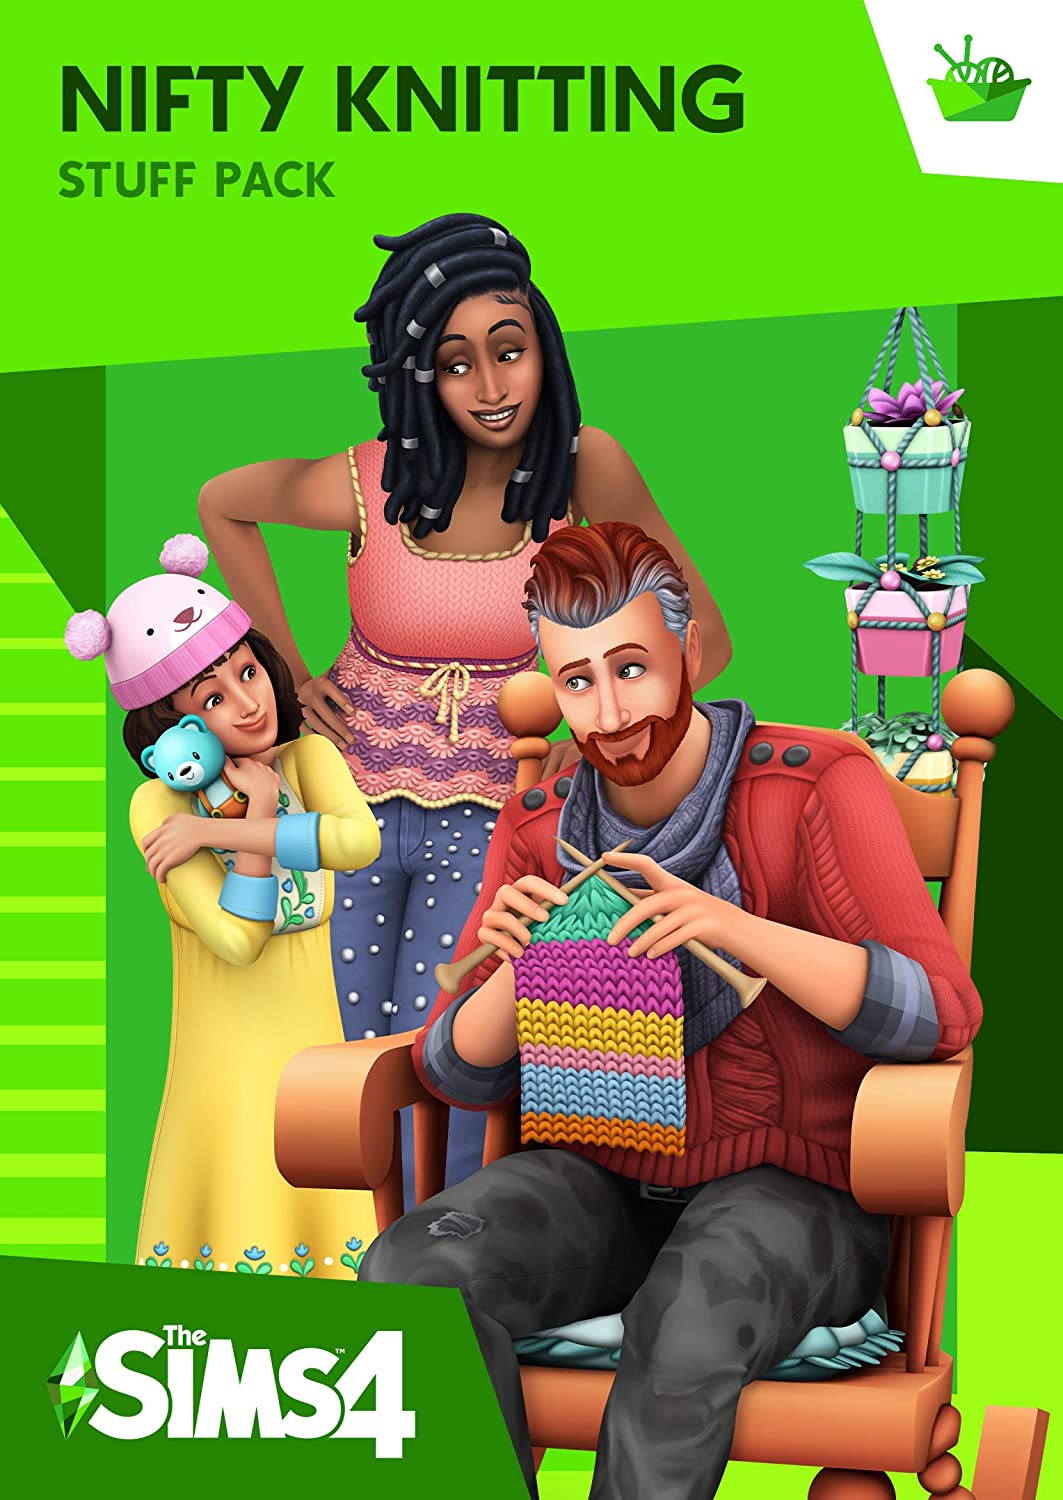 The Sims 4: Nifty Knitting Stuff CD Key for Origin